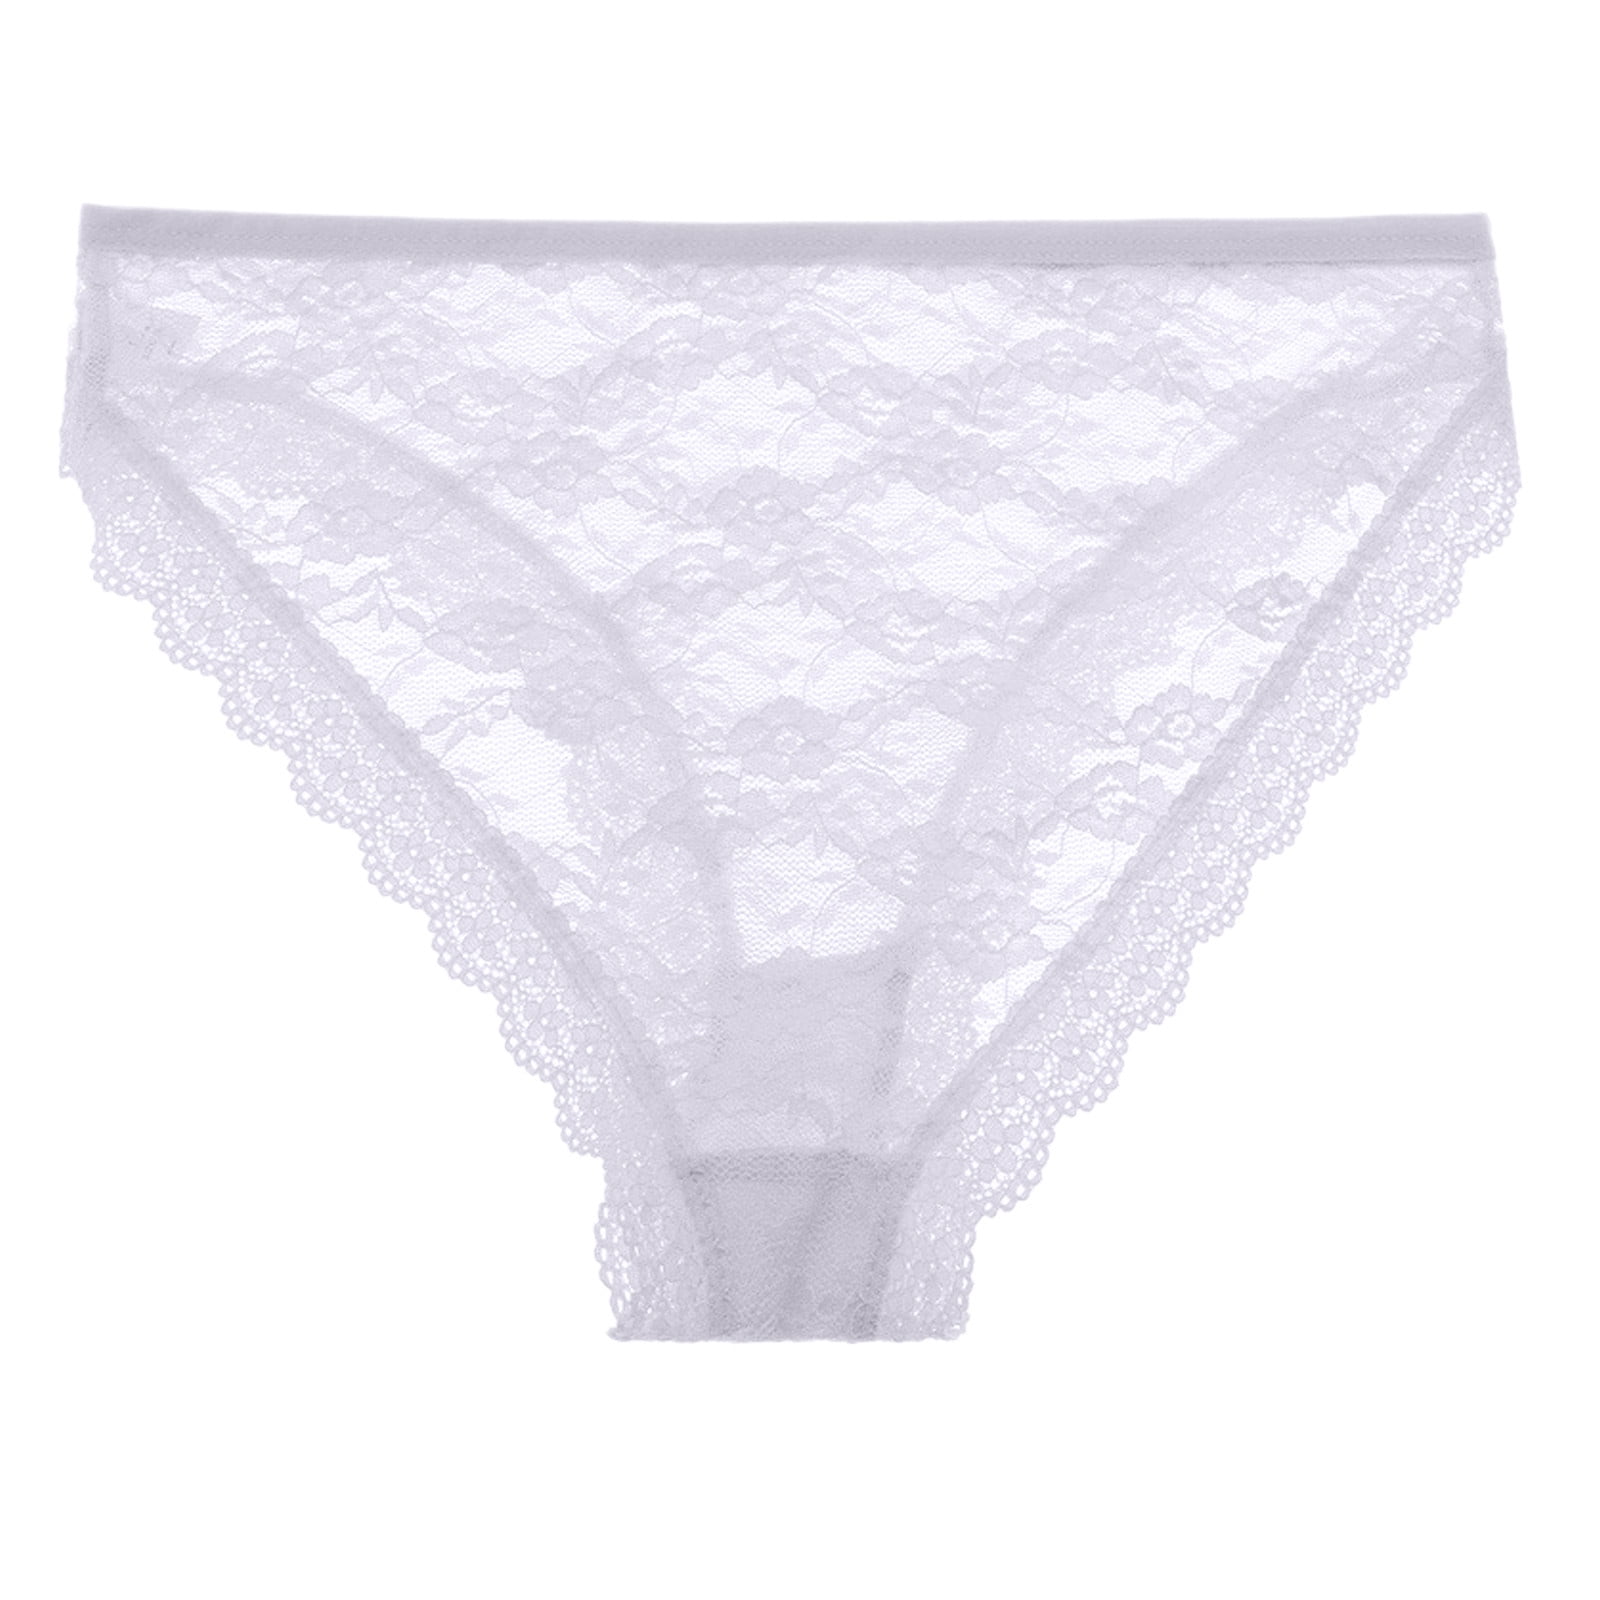 Eashery Lingery for Women Women's Body Caress Flexible Fit Panties